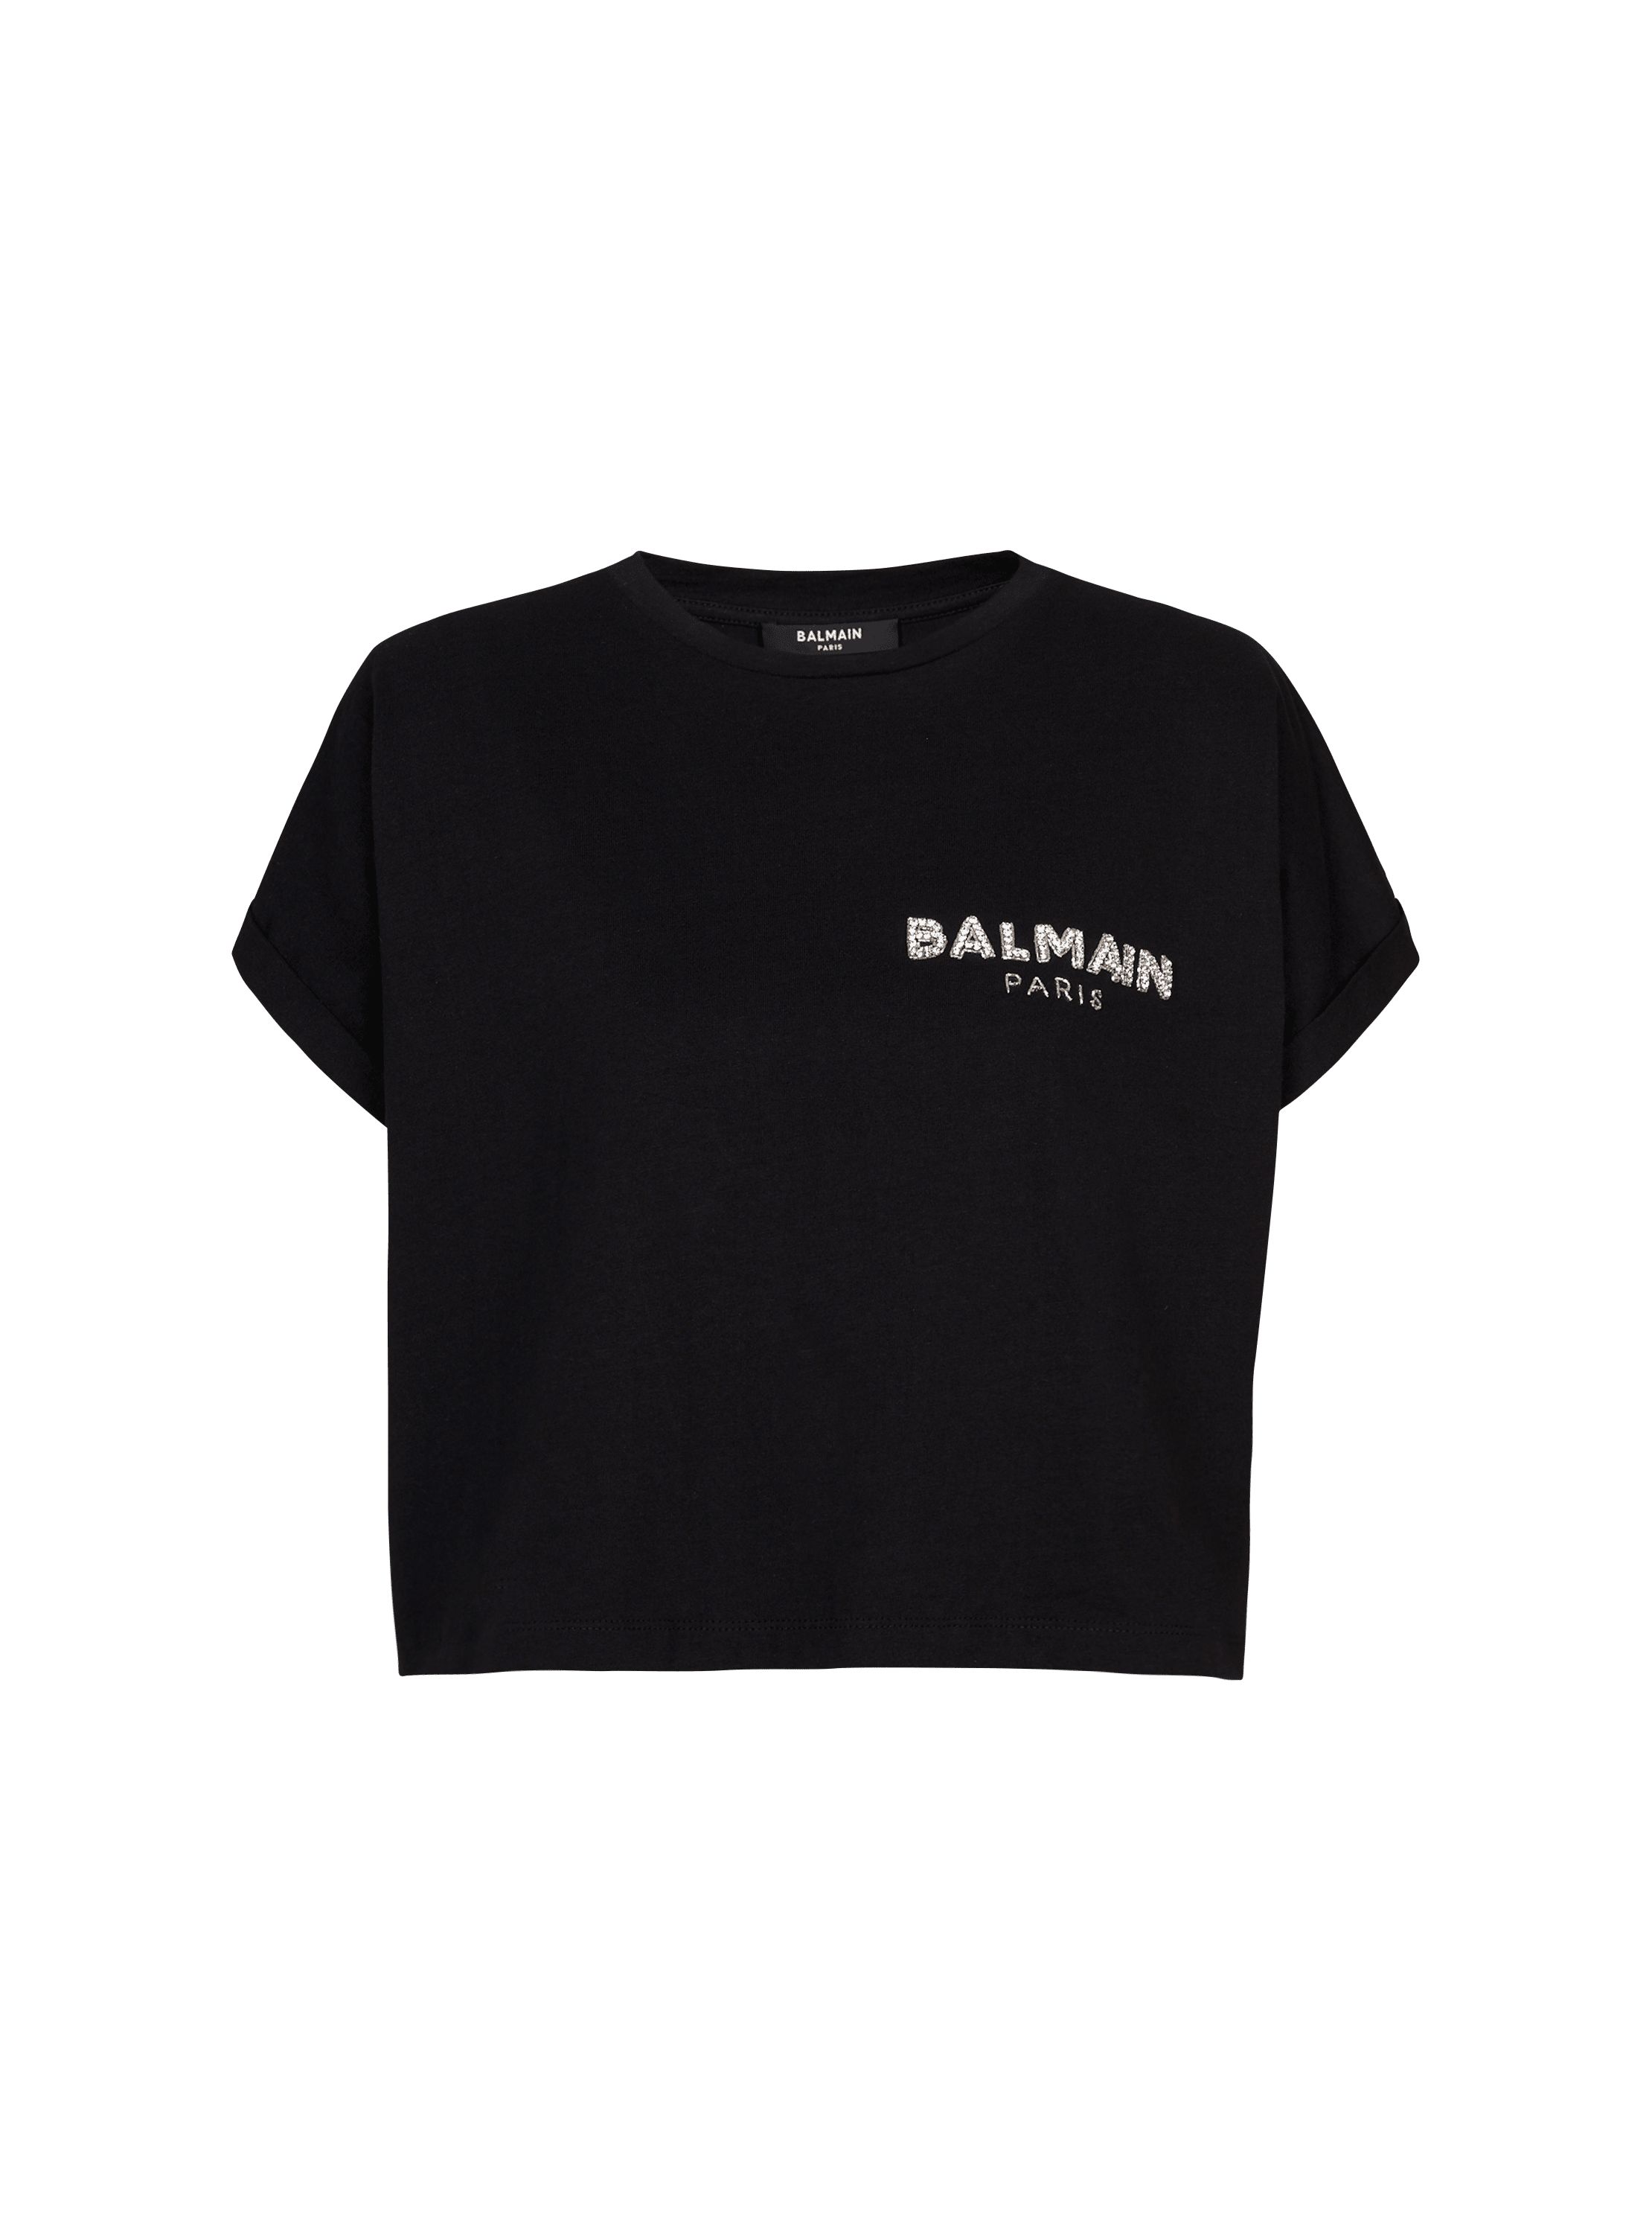 Camiseta corta de algodón con pequeño logotipo de Balmain bordado